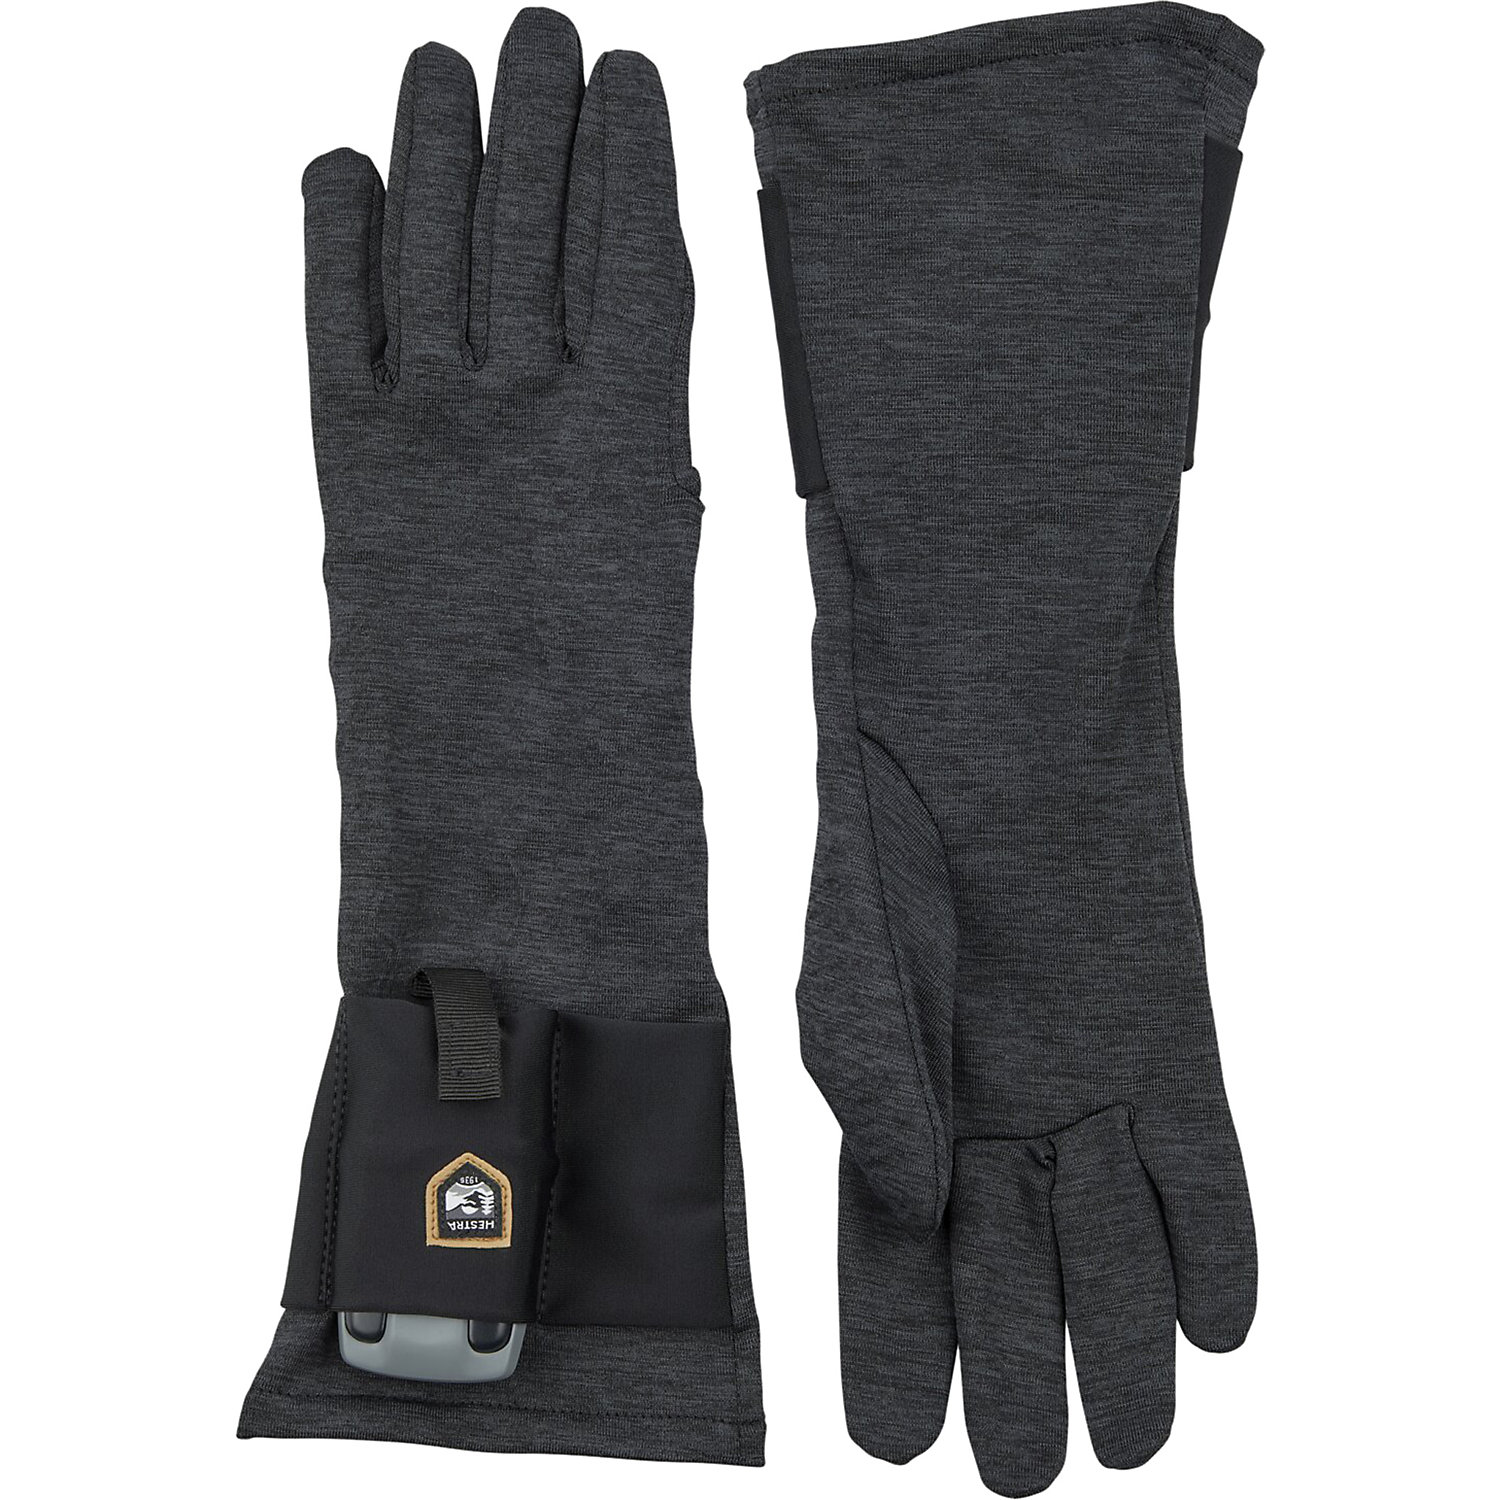 Hestra Tactility Heat Liner Glove